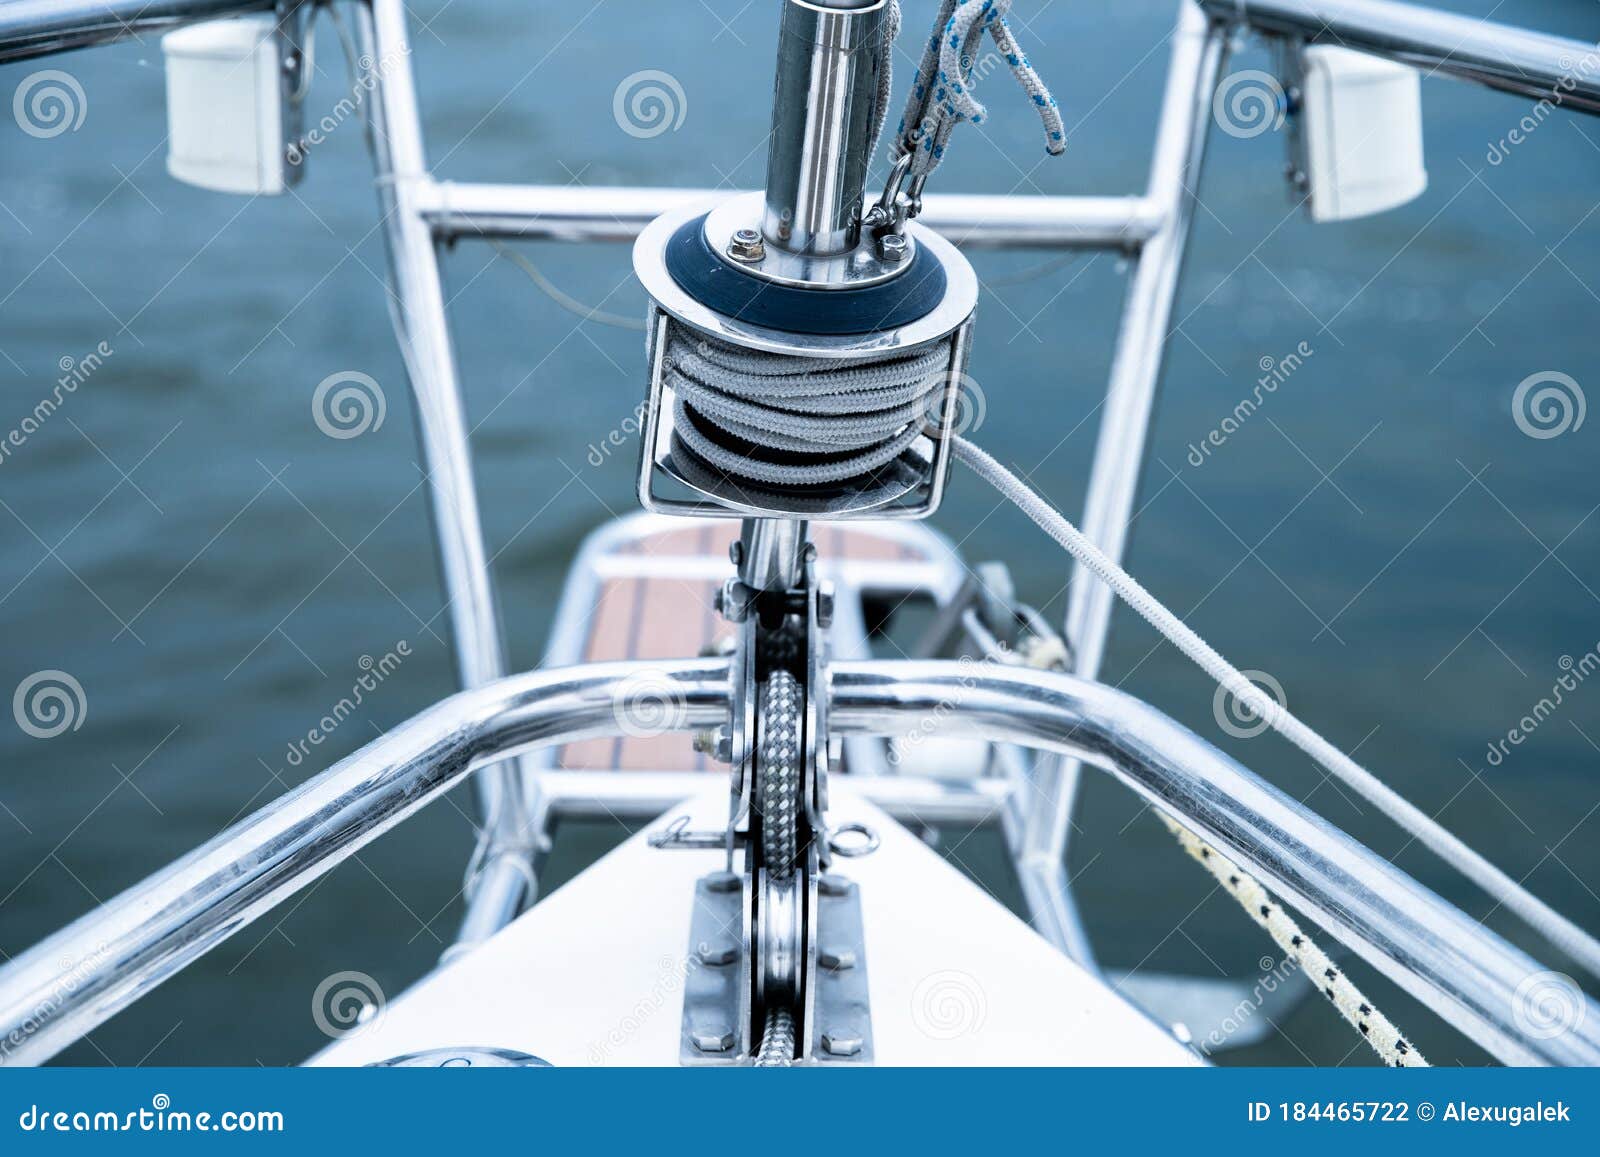 sailing yacht drum